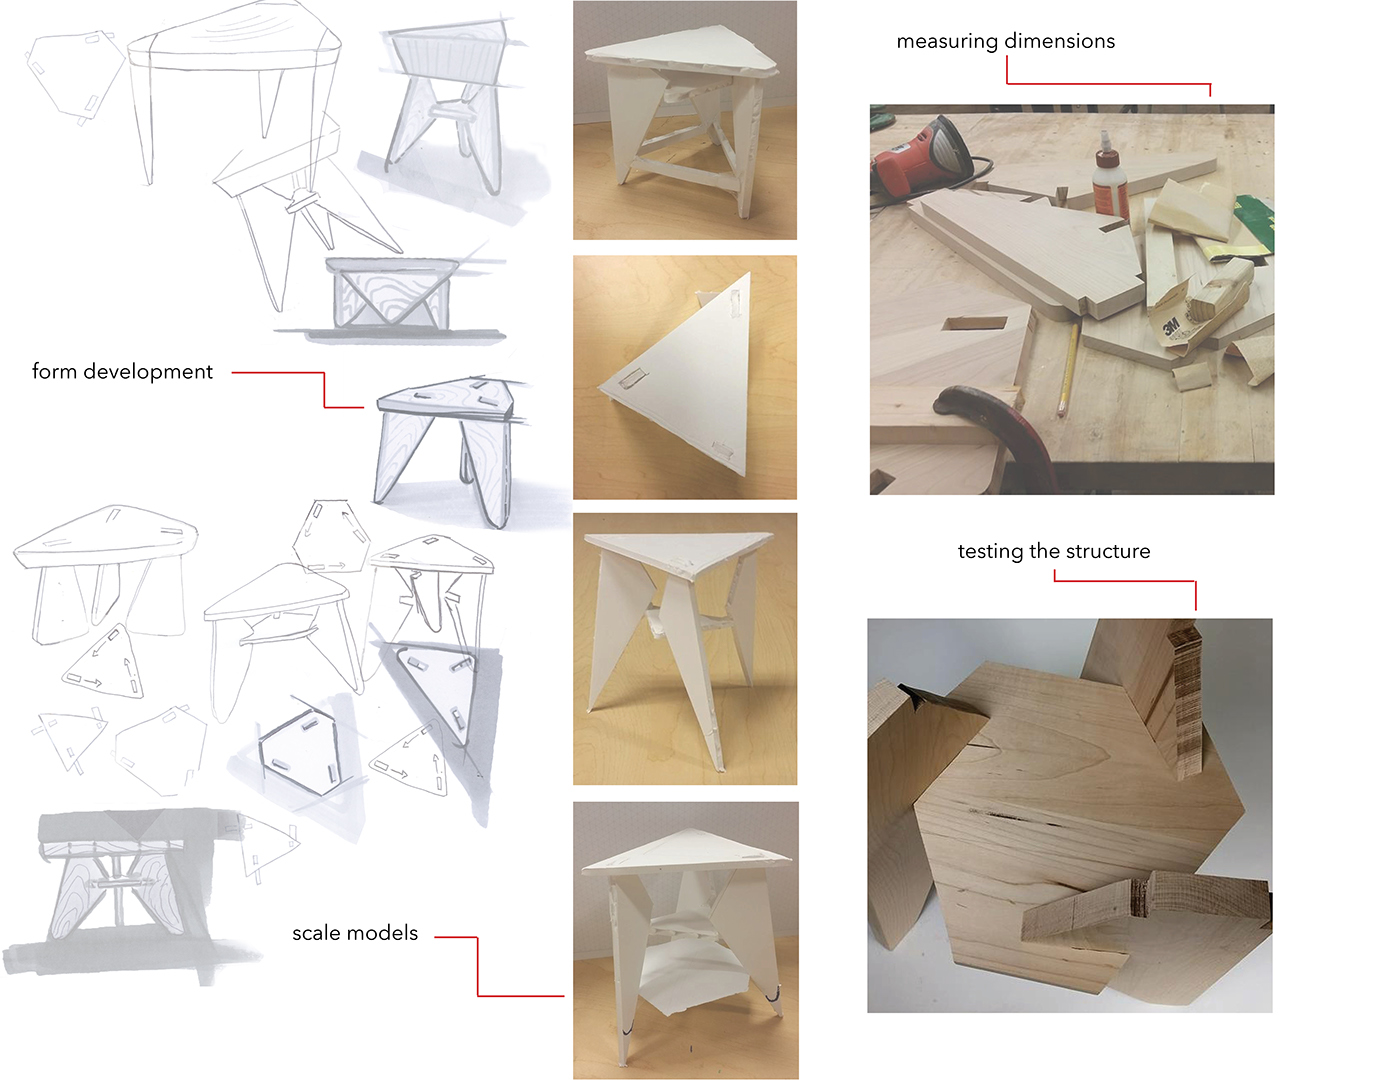 #industrialdesign #productdesign #furnituredesign #furniture  #wood #handmade mobililty college students Student design